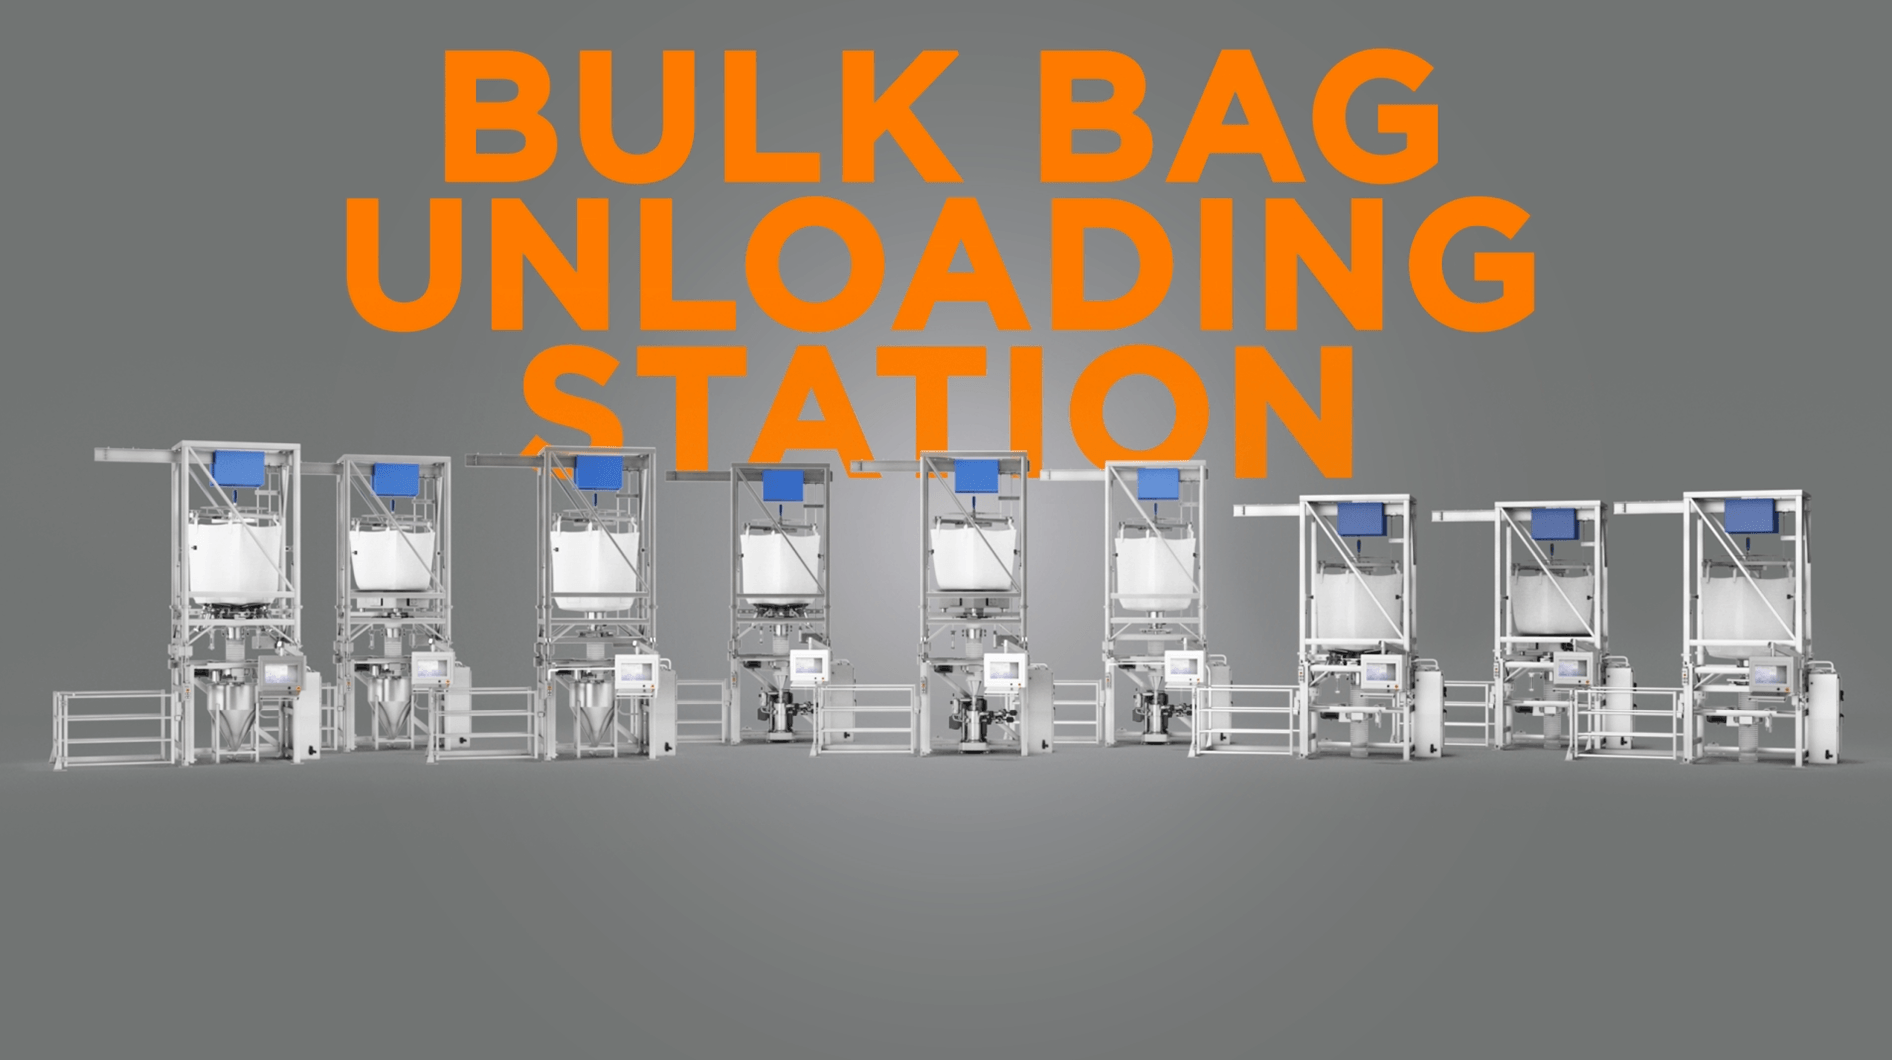 Bulk Bag Unloading Station Video Graphic - Configurations